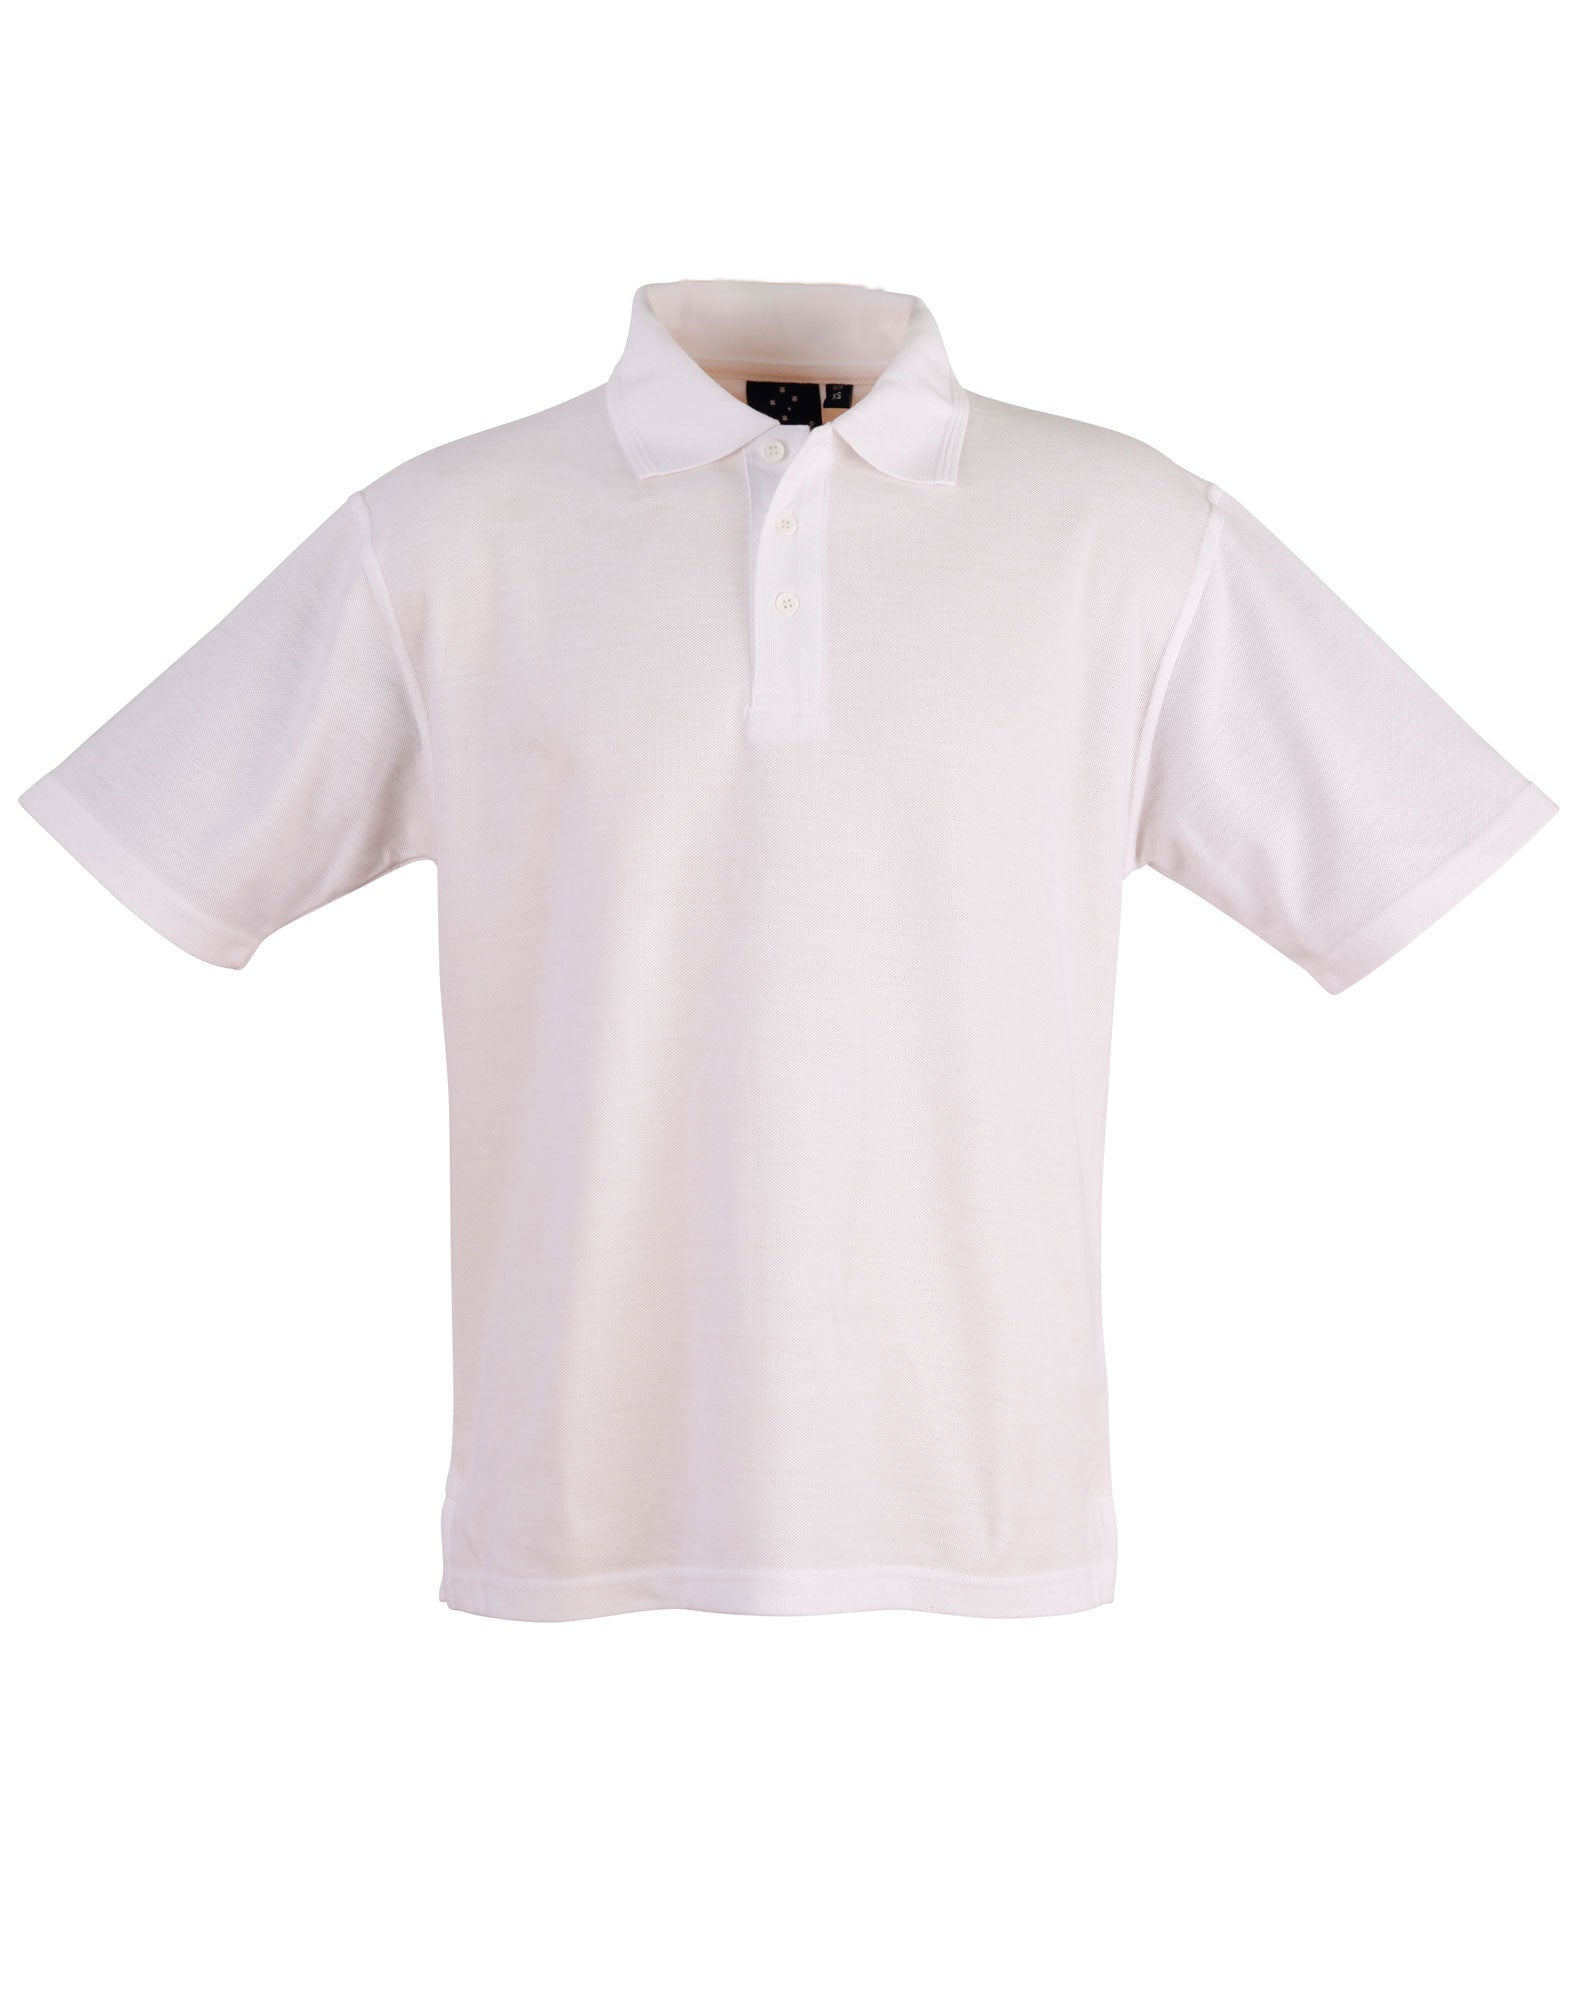 Winning Spirit Poly/Cotton Pique Knit Short Sleeve Polo (Unisex)-(PS11)